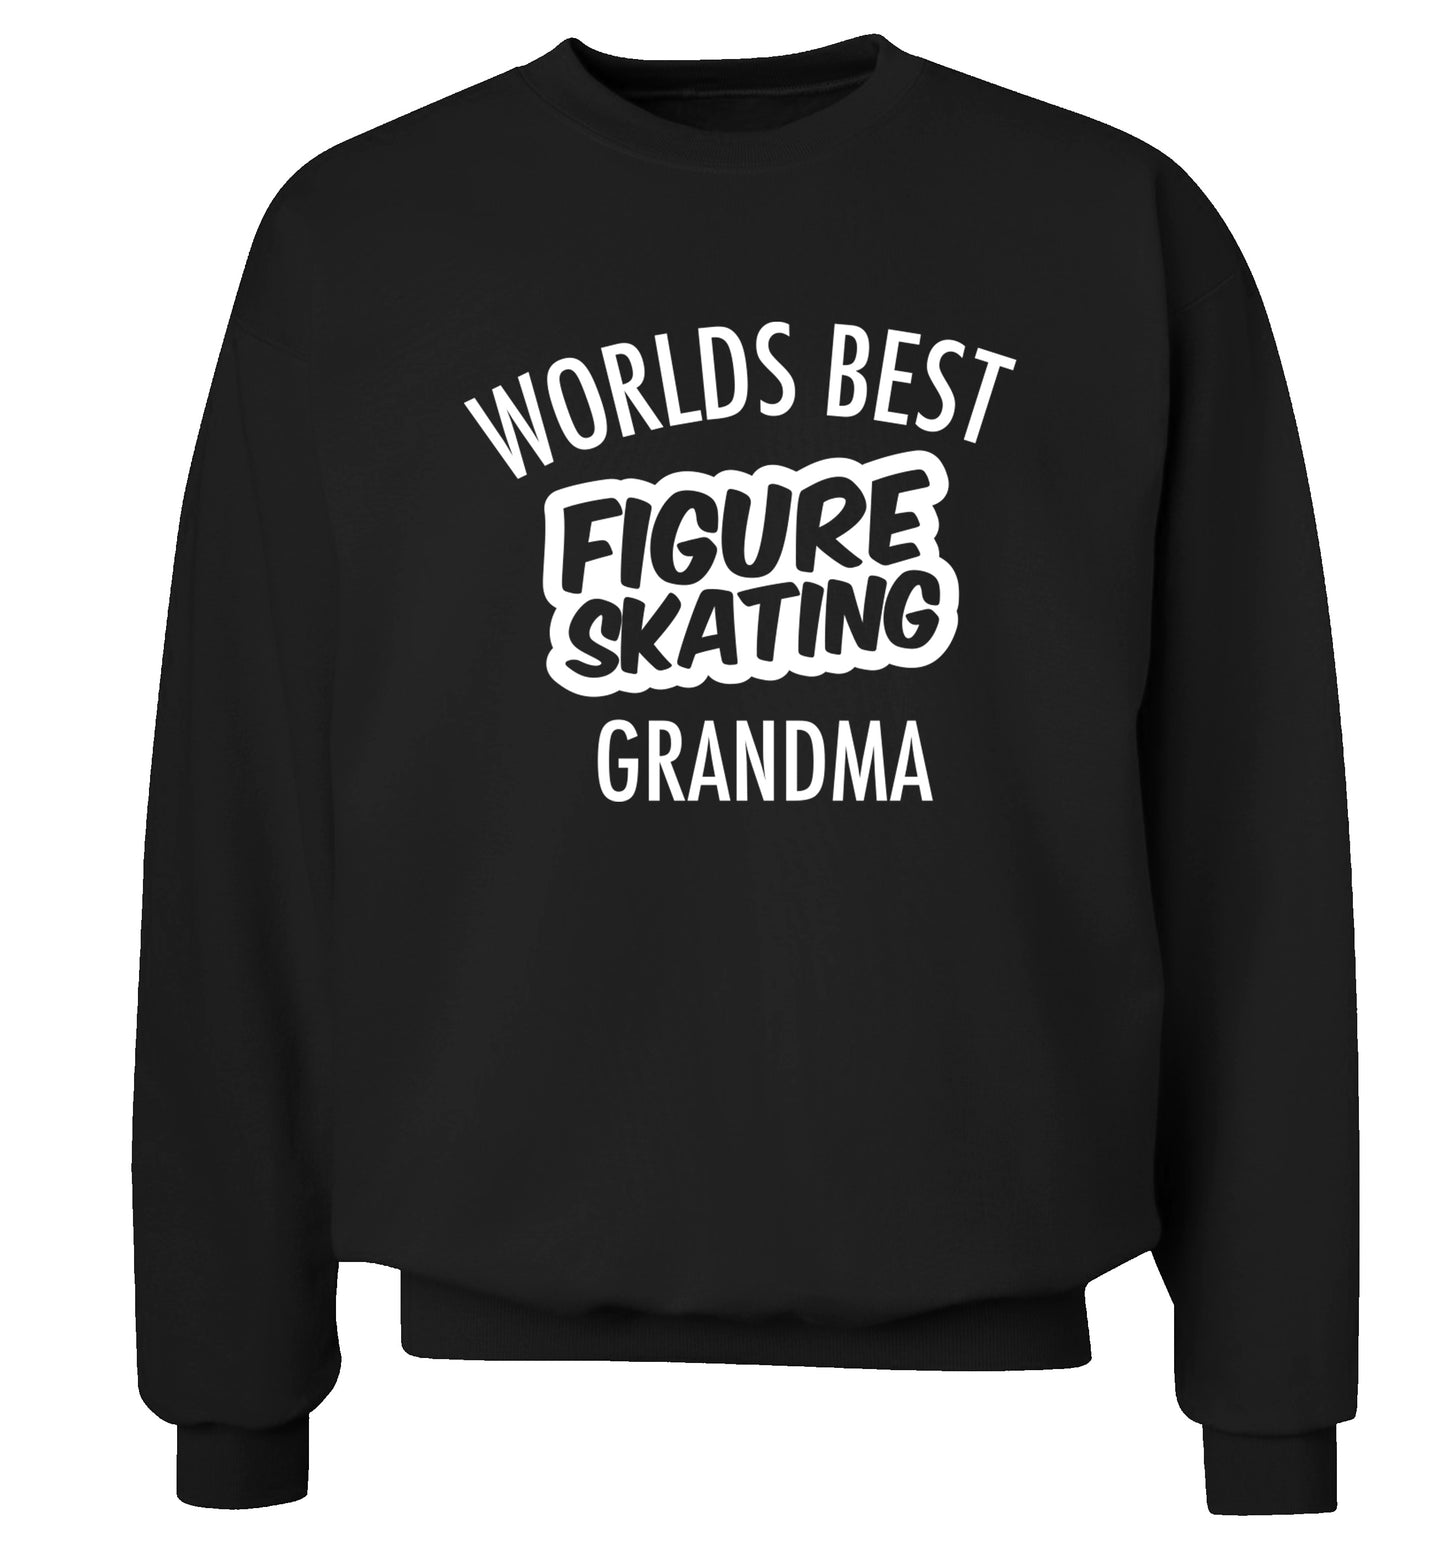 Worlds best figure skating grandma Adult's unisexblack Sweater 2XL